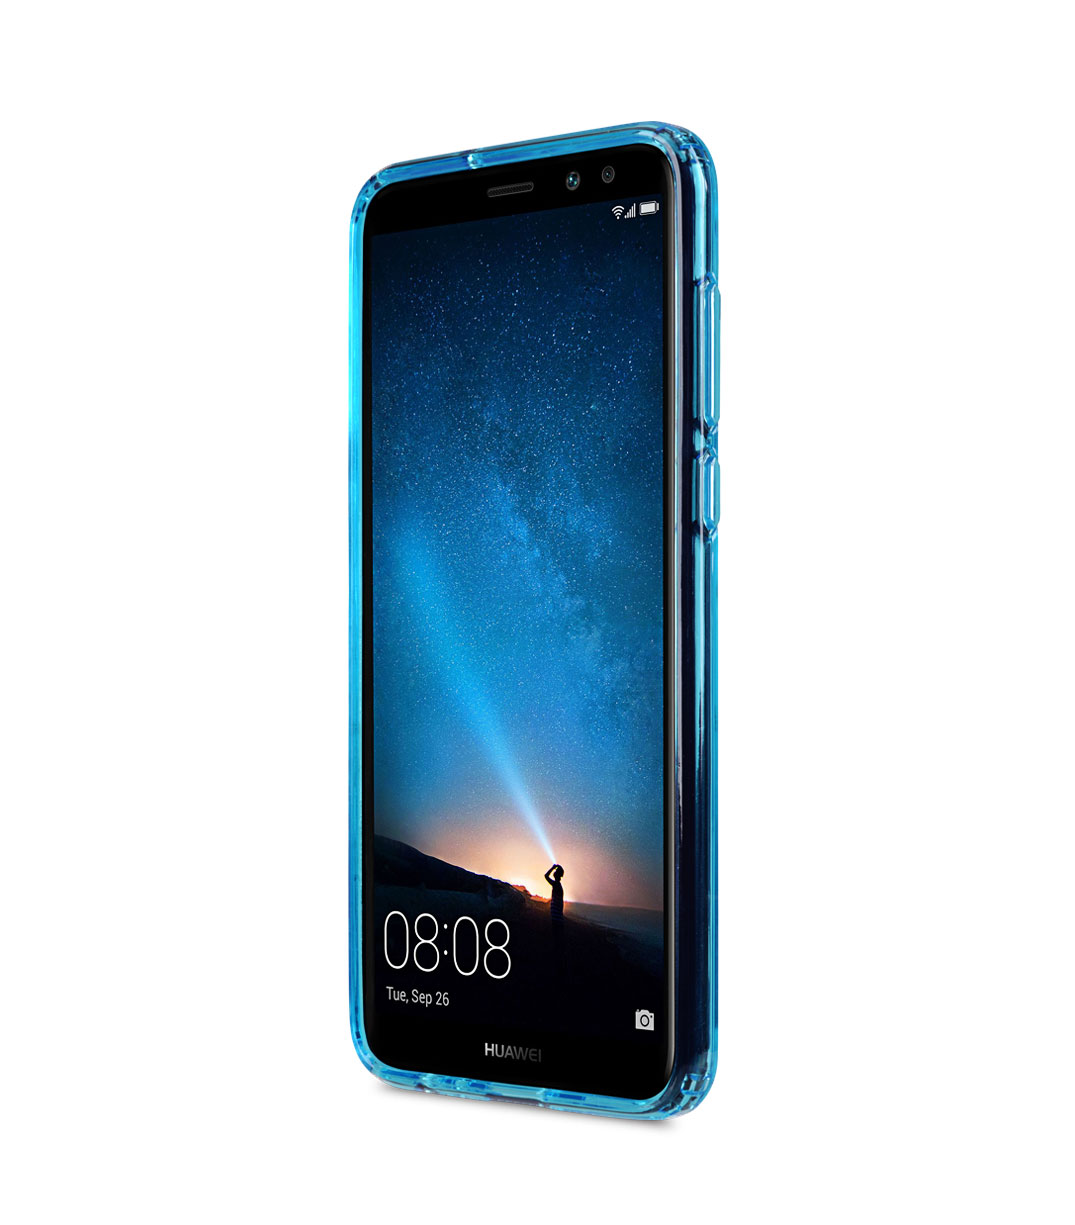 Melkco PolyUltima Case for Huawei Mate 10 Lite - (Transparent Blue)